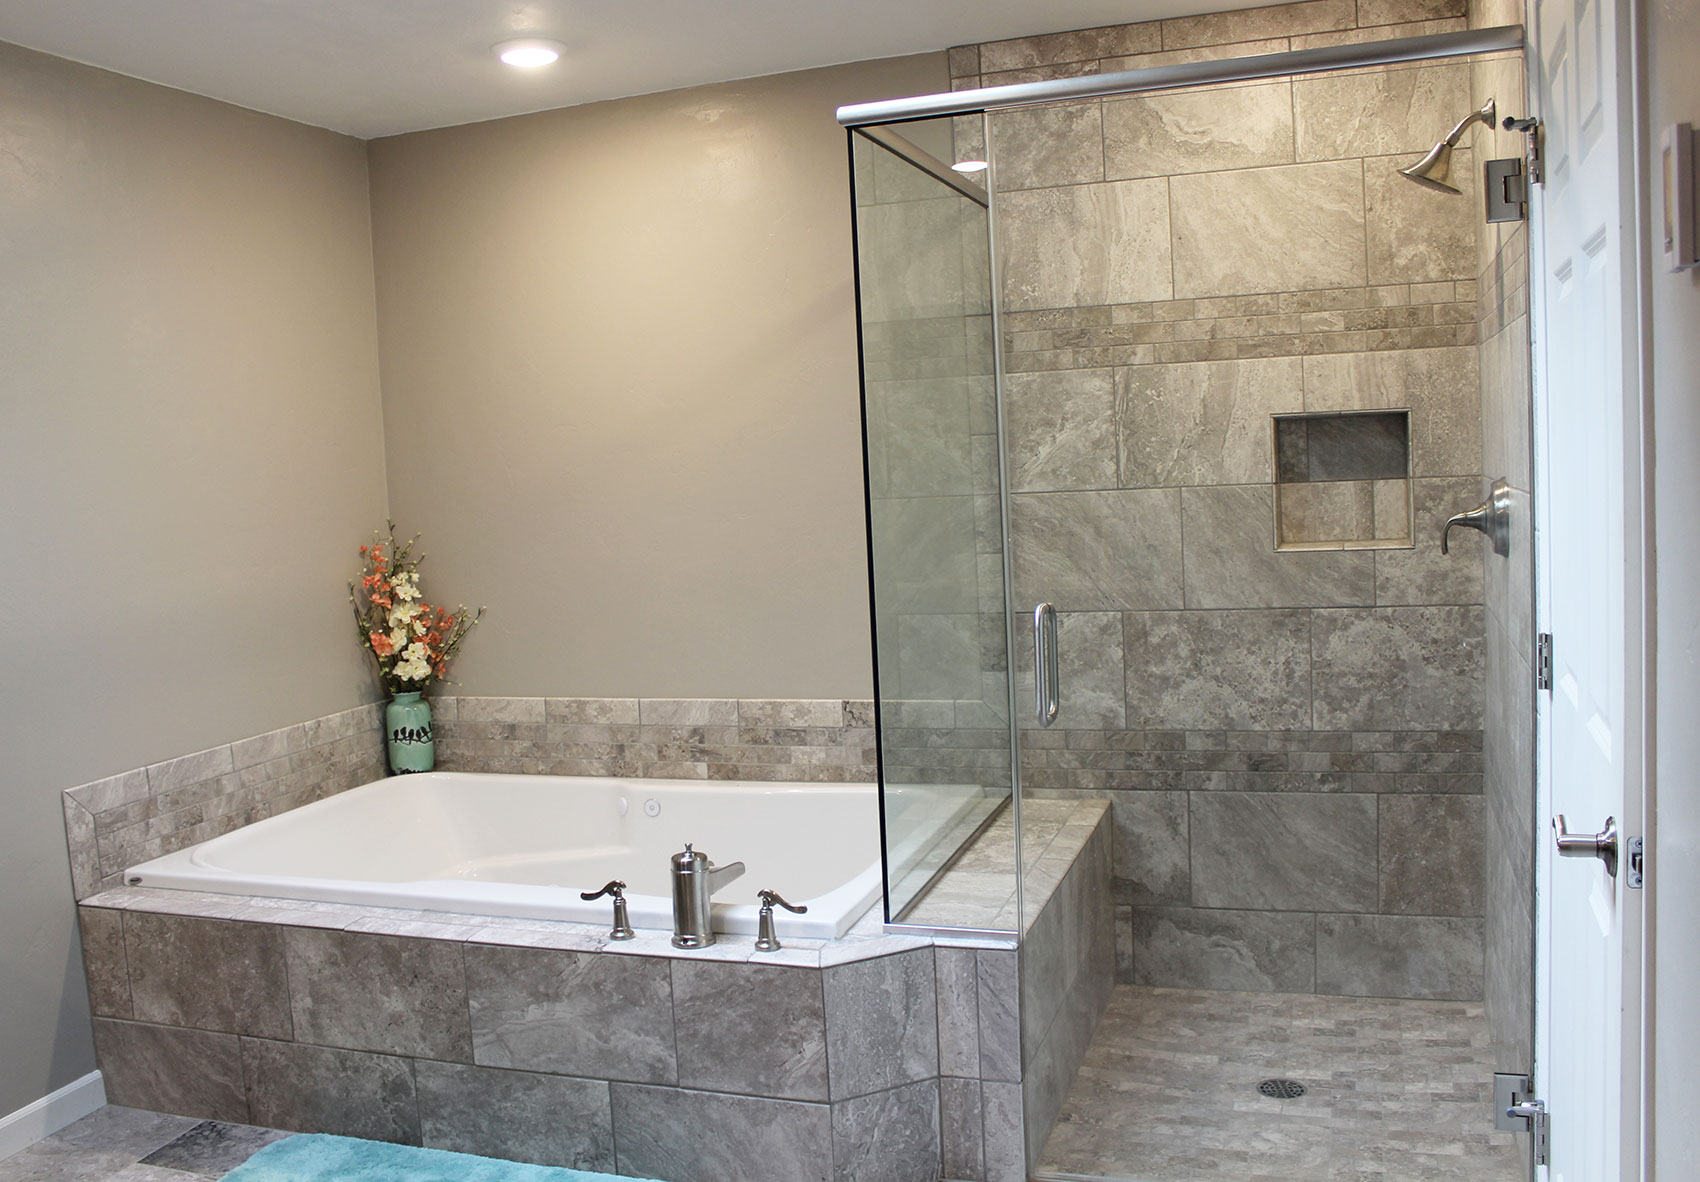 Bathroom remodel - Master Bathroom Remodel - Custom Tile - PortSide ...